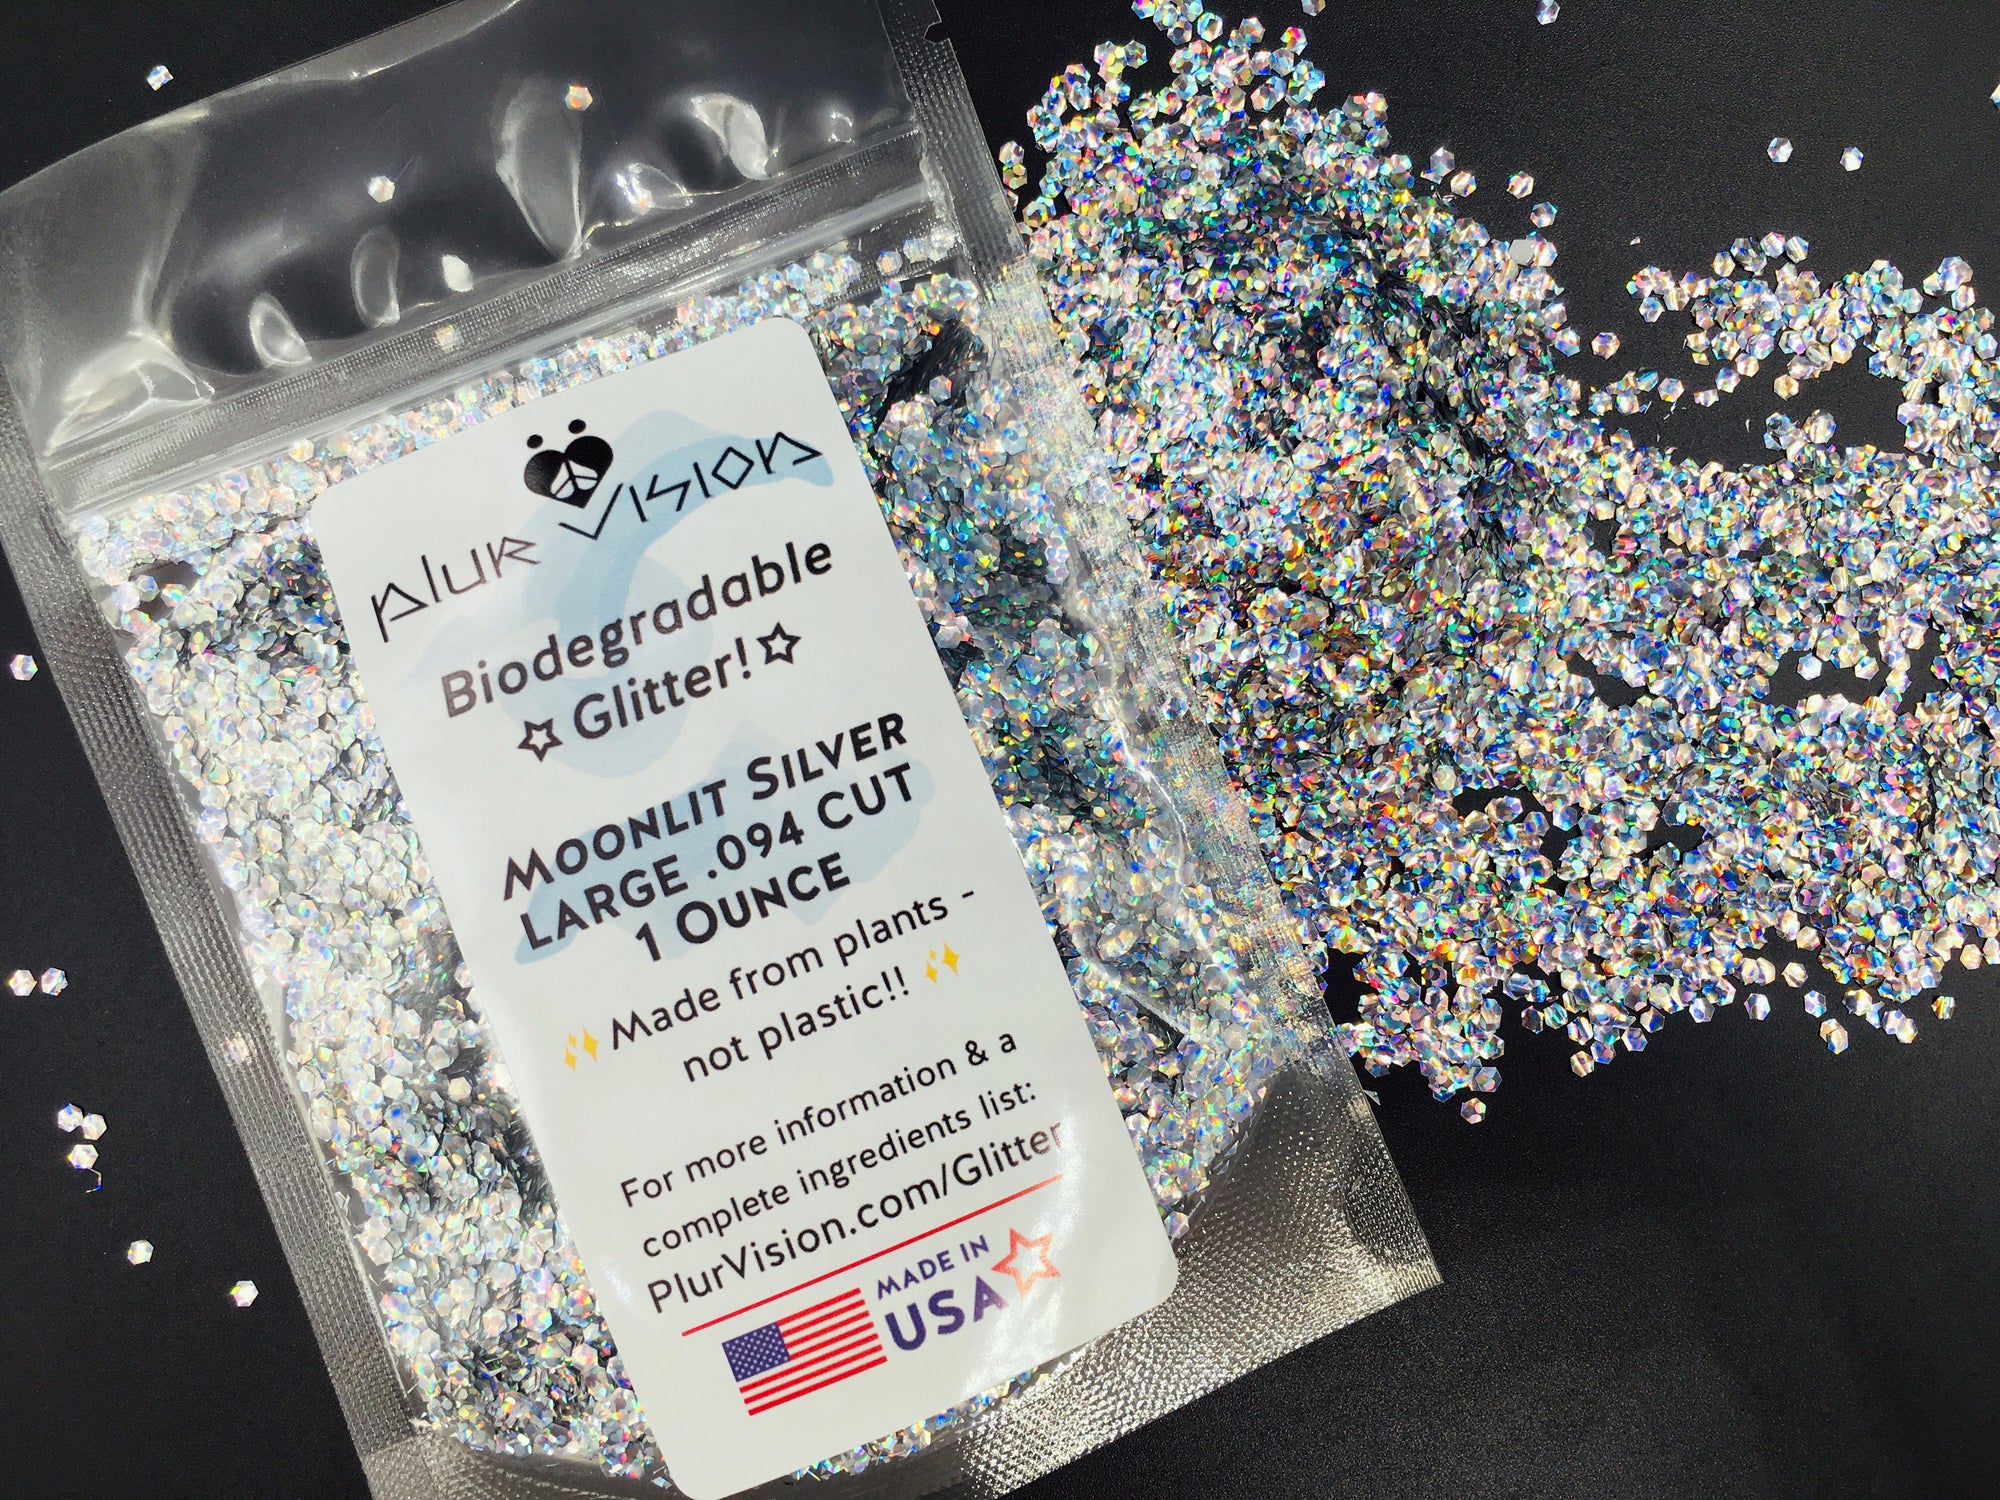 ✨Moonlit Silver Large Cut Biodegradable Glitter! ✨ - Alternative Imagination